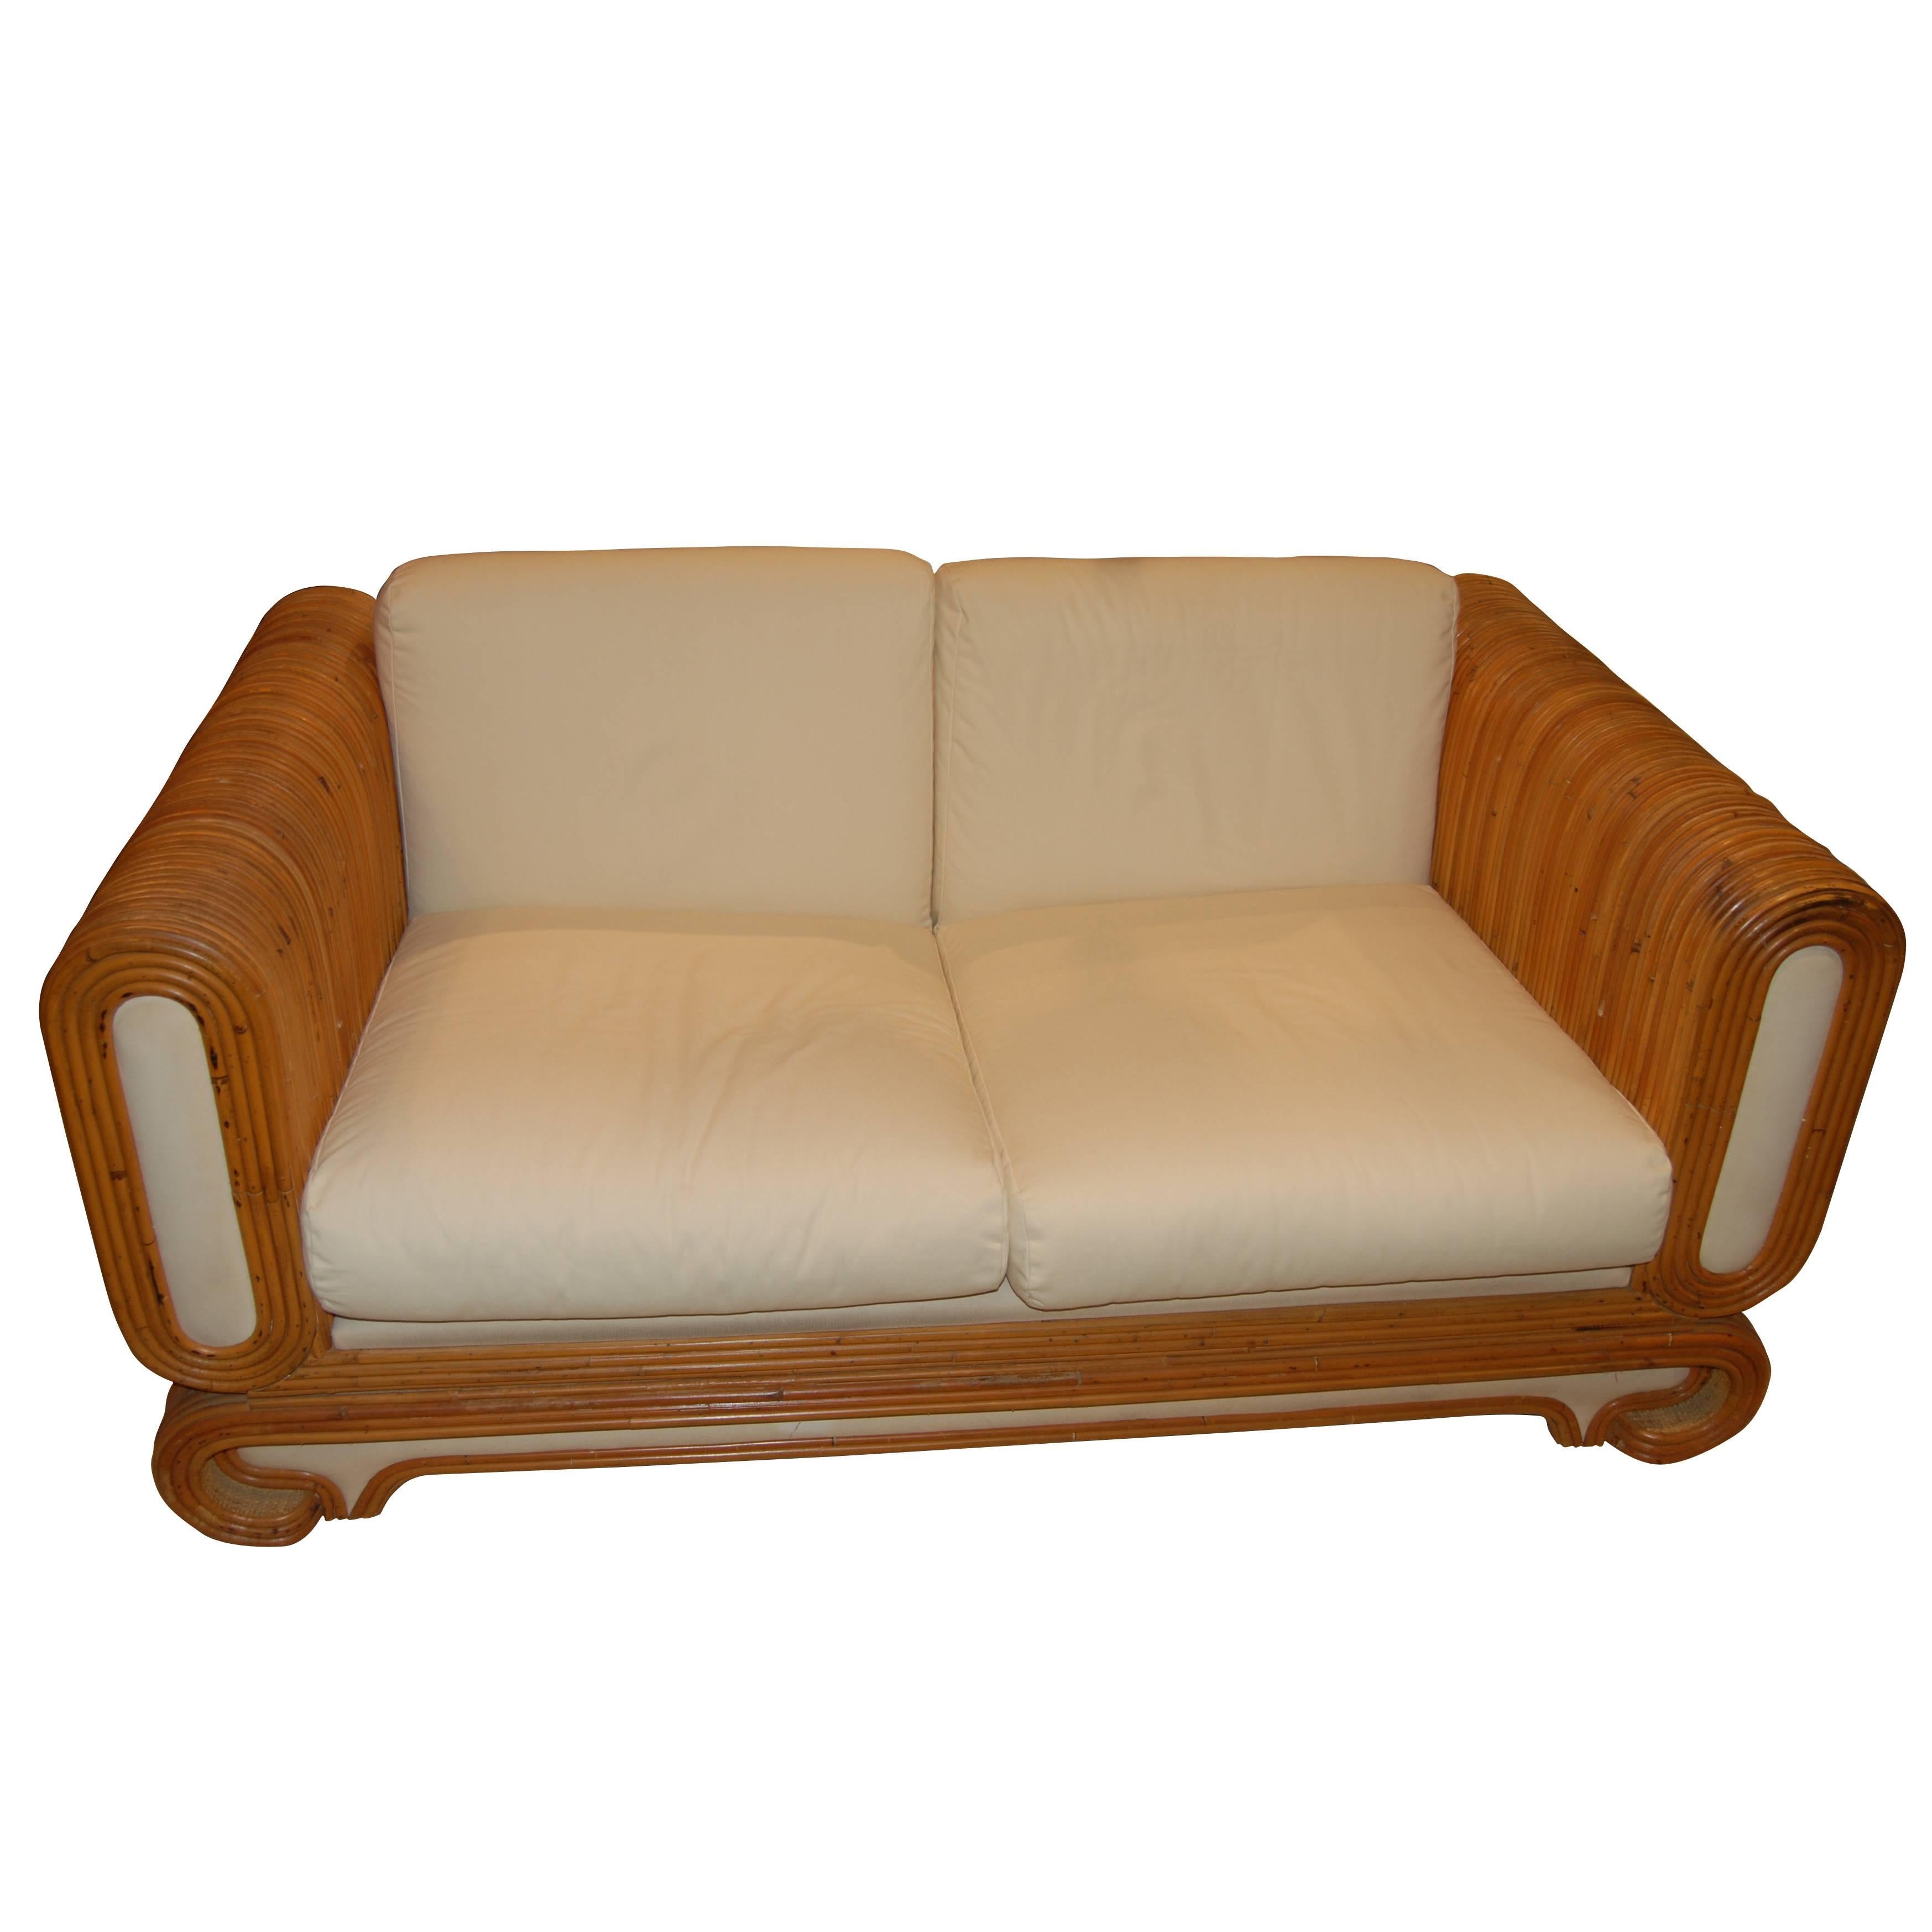 1970s Rattan Sofa For Sale